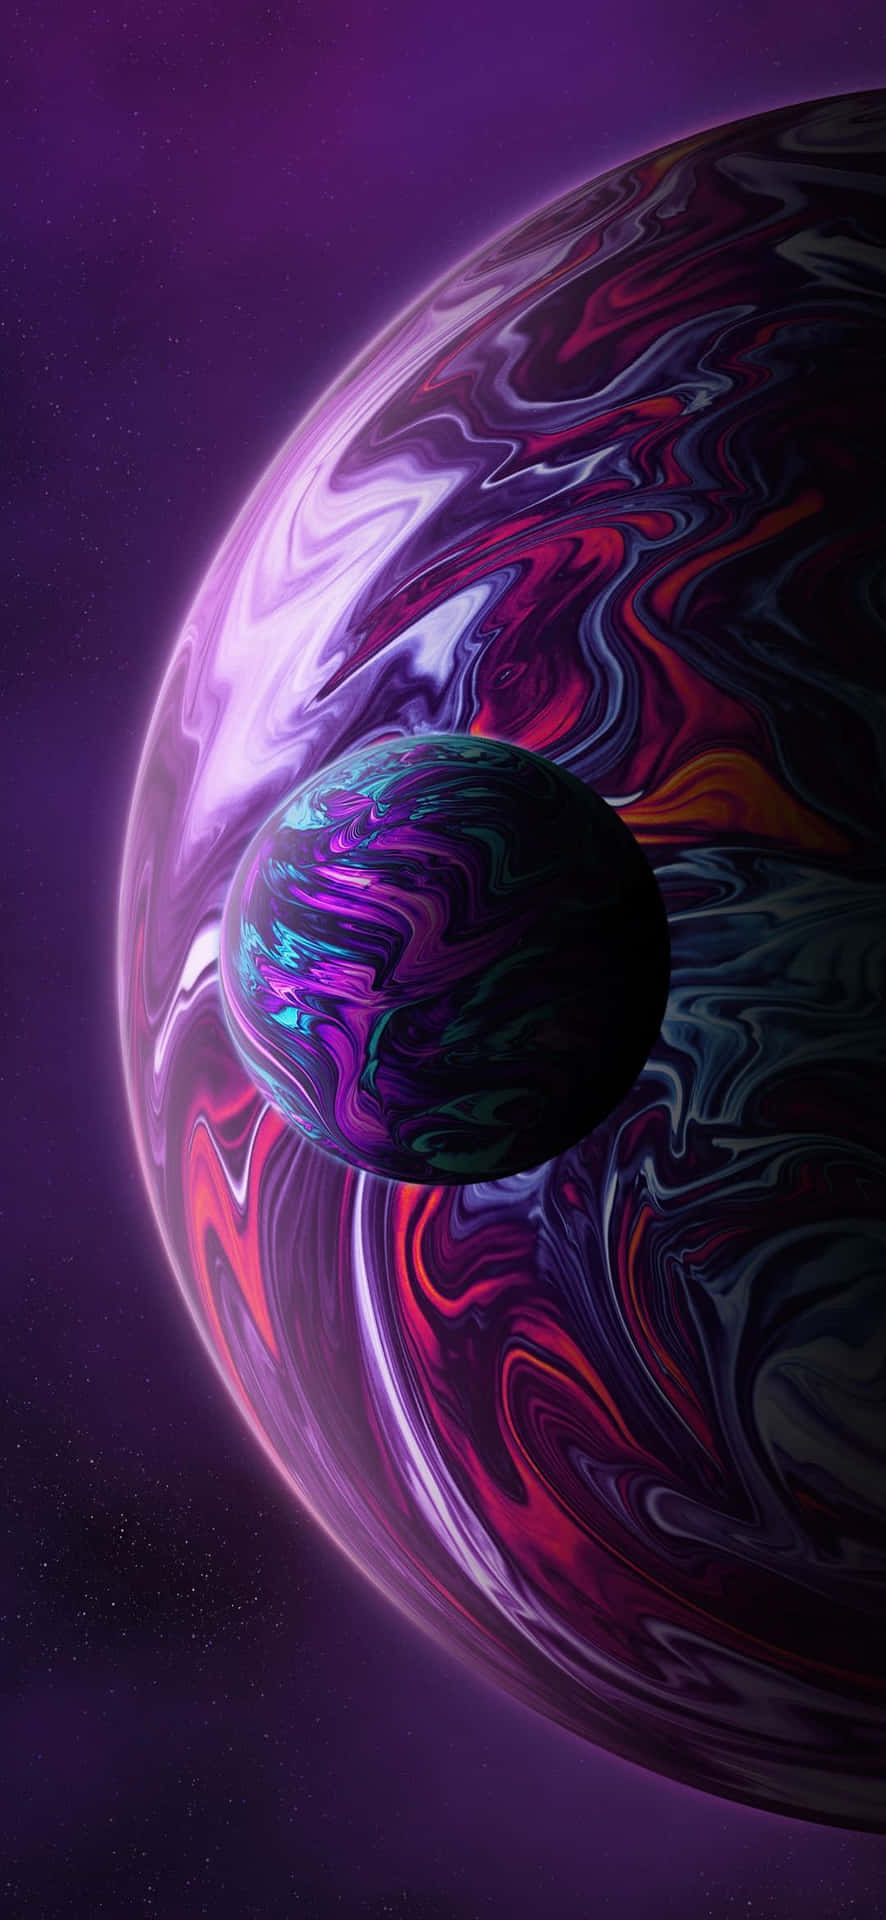 A Purple And Purple Swirling Planet Wallpaper